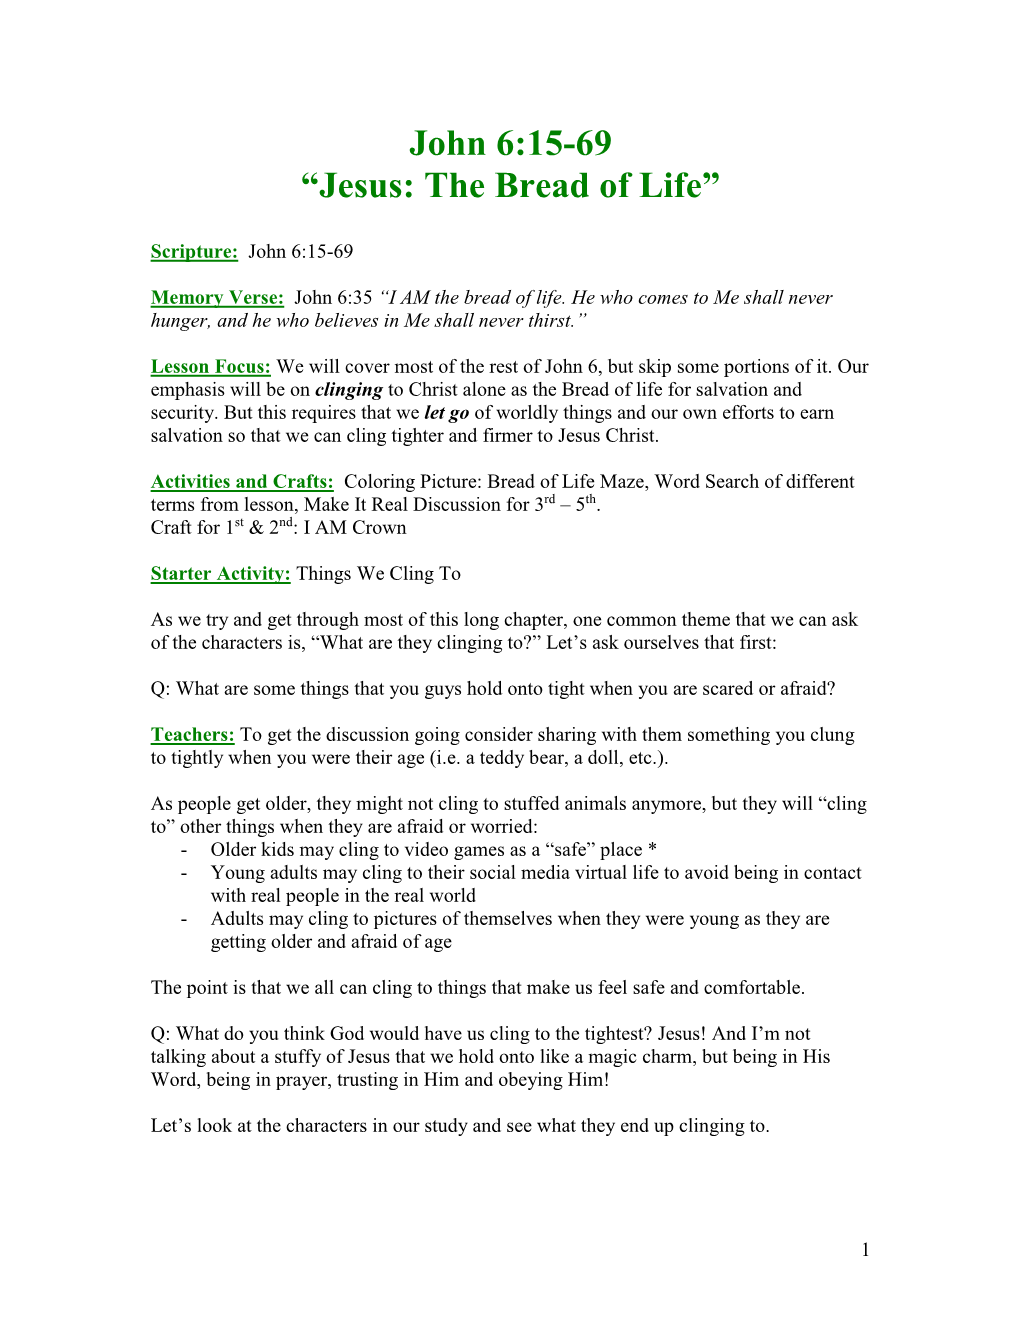 John 6:15-69 “Jesus: the Bread of Life”